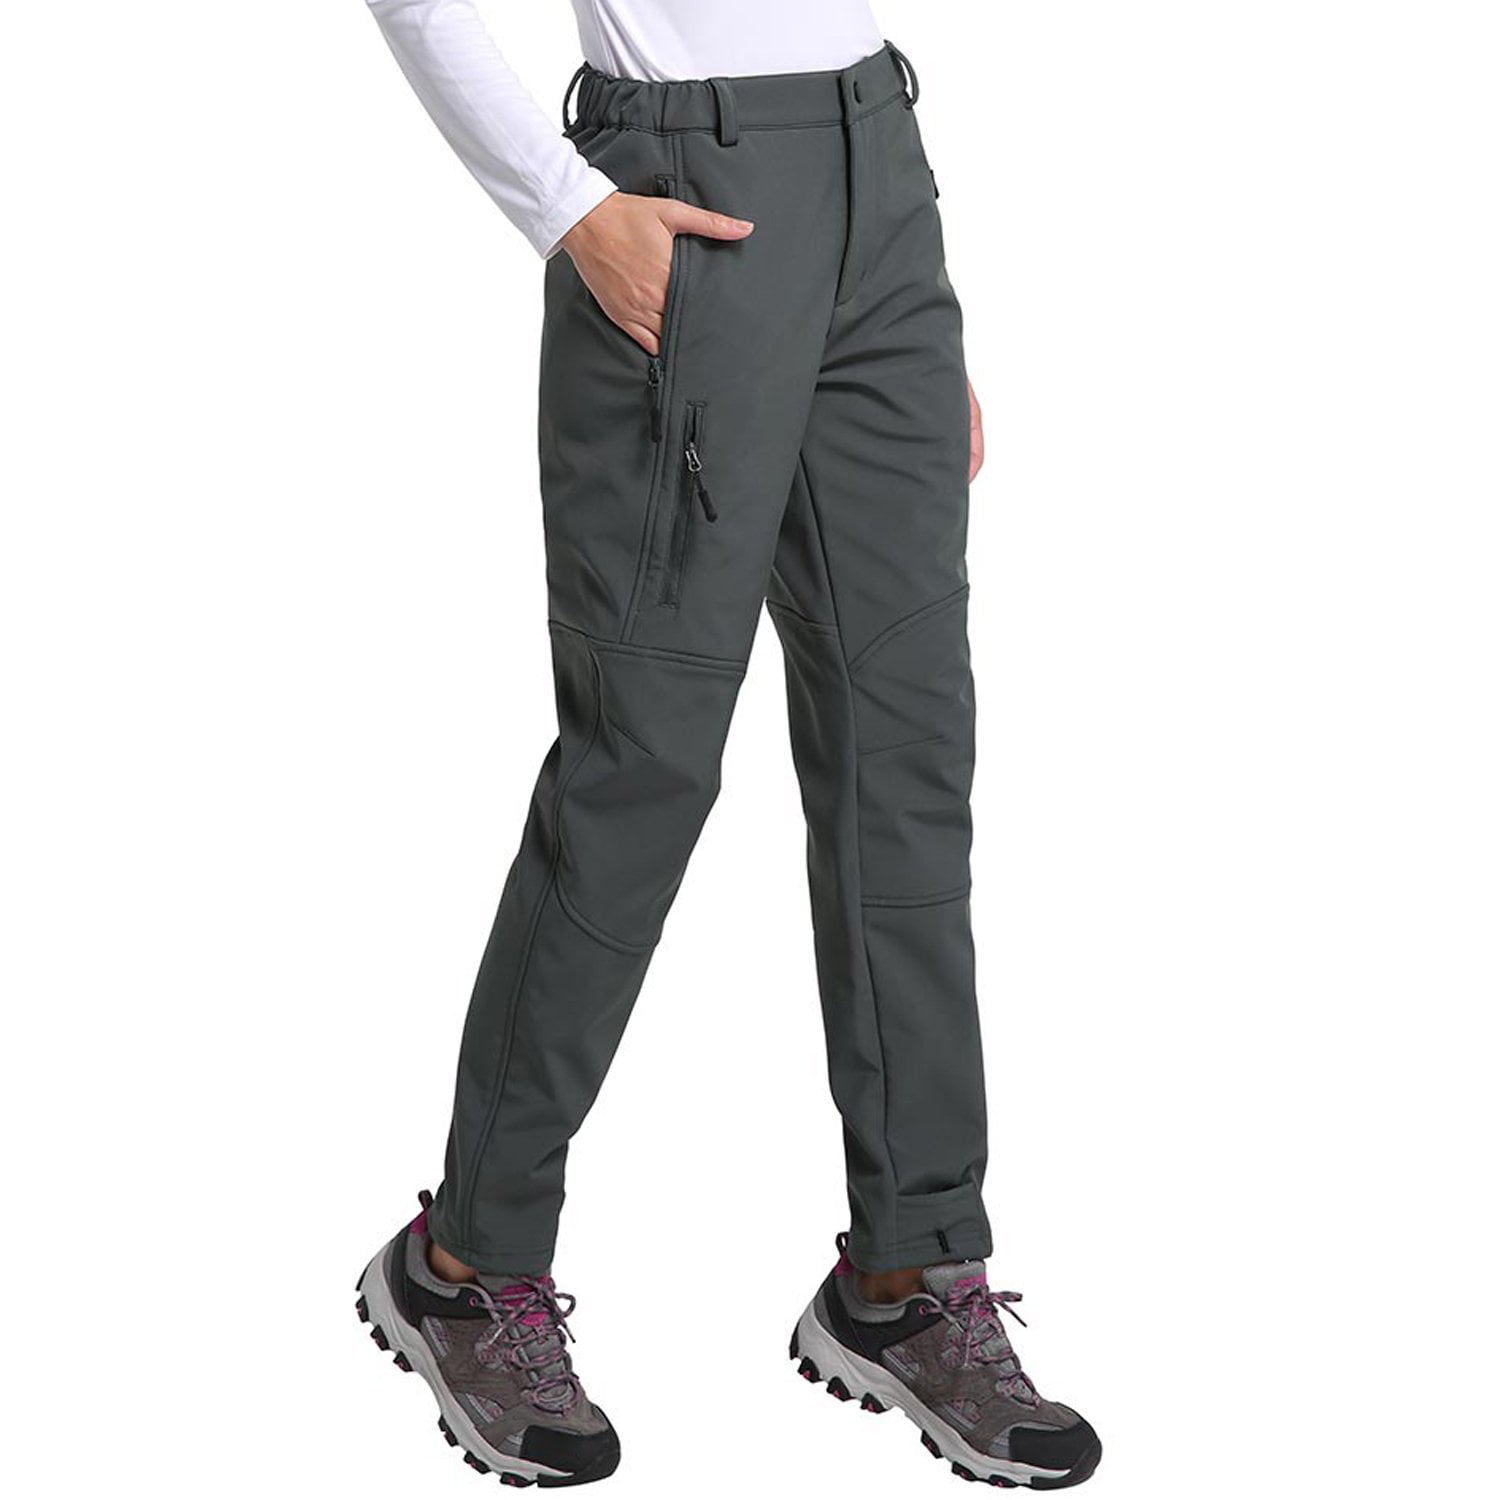 Ski Pants Women/Winter Outdoor Fleece Lined Ski Pants Windproof Slim Cargo Snow Ski Hiking Pants,Black,S